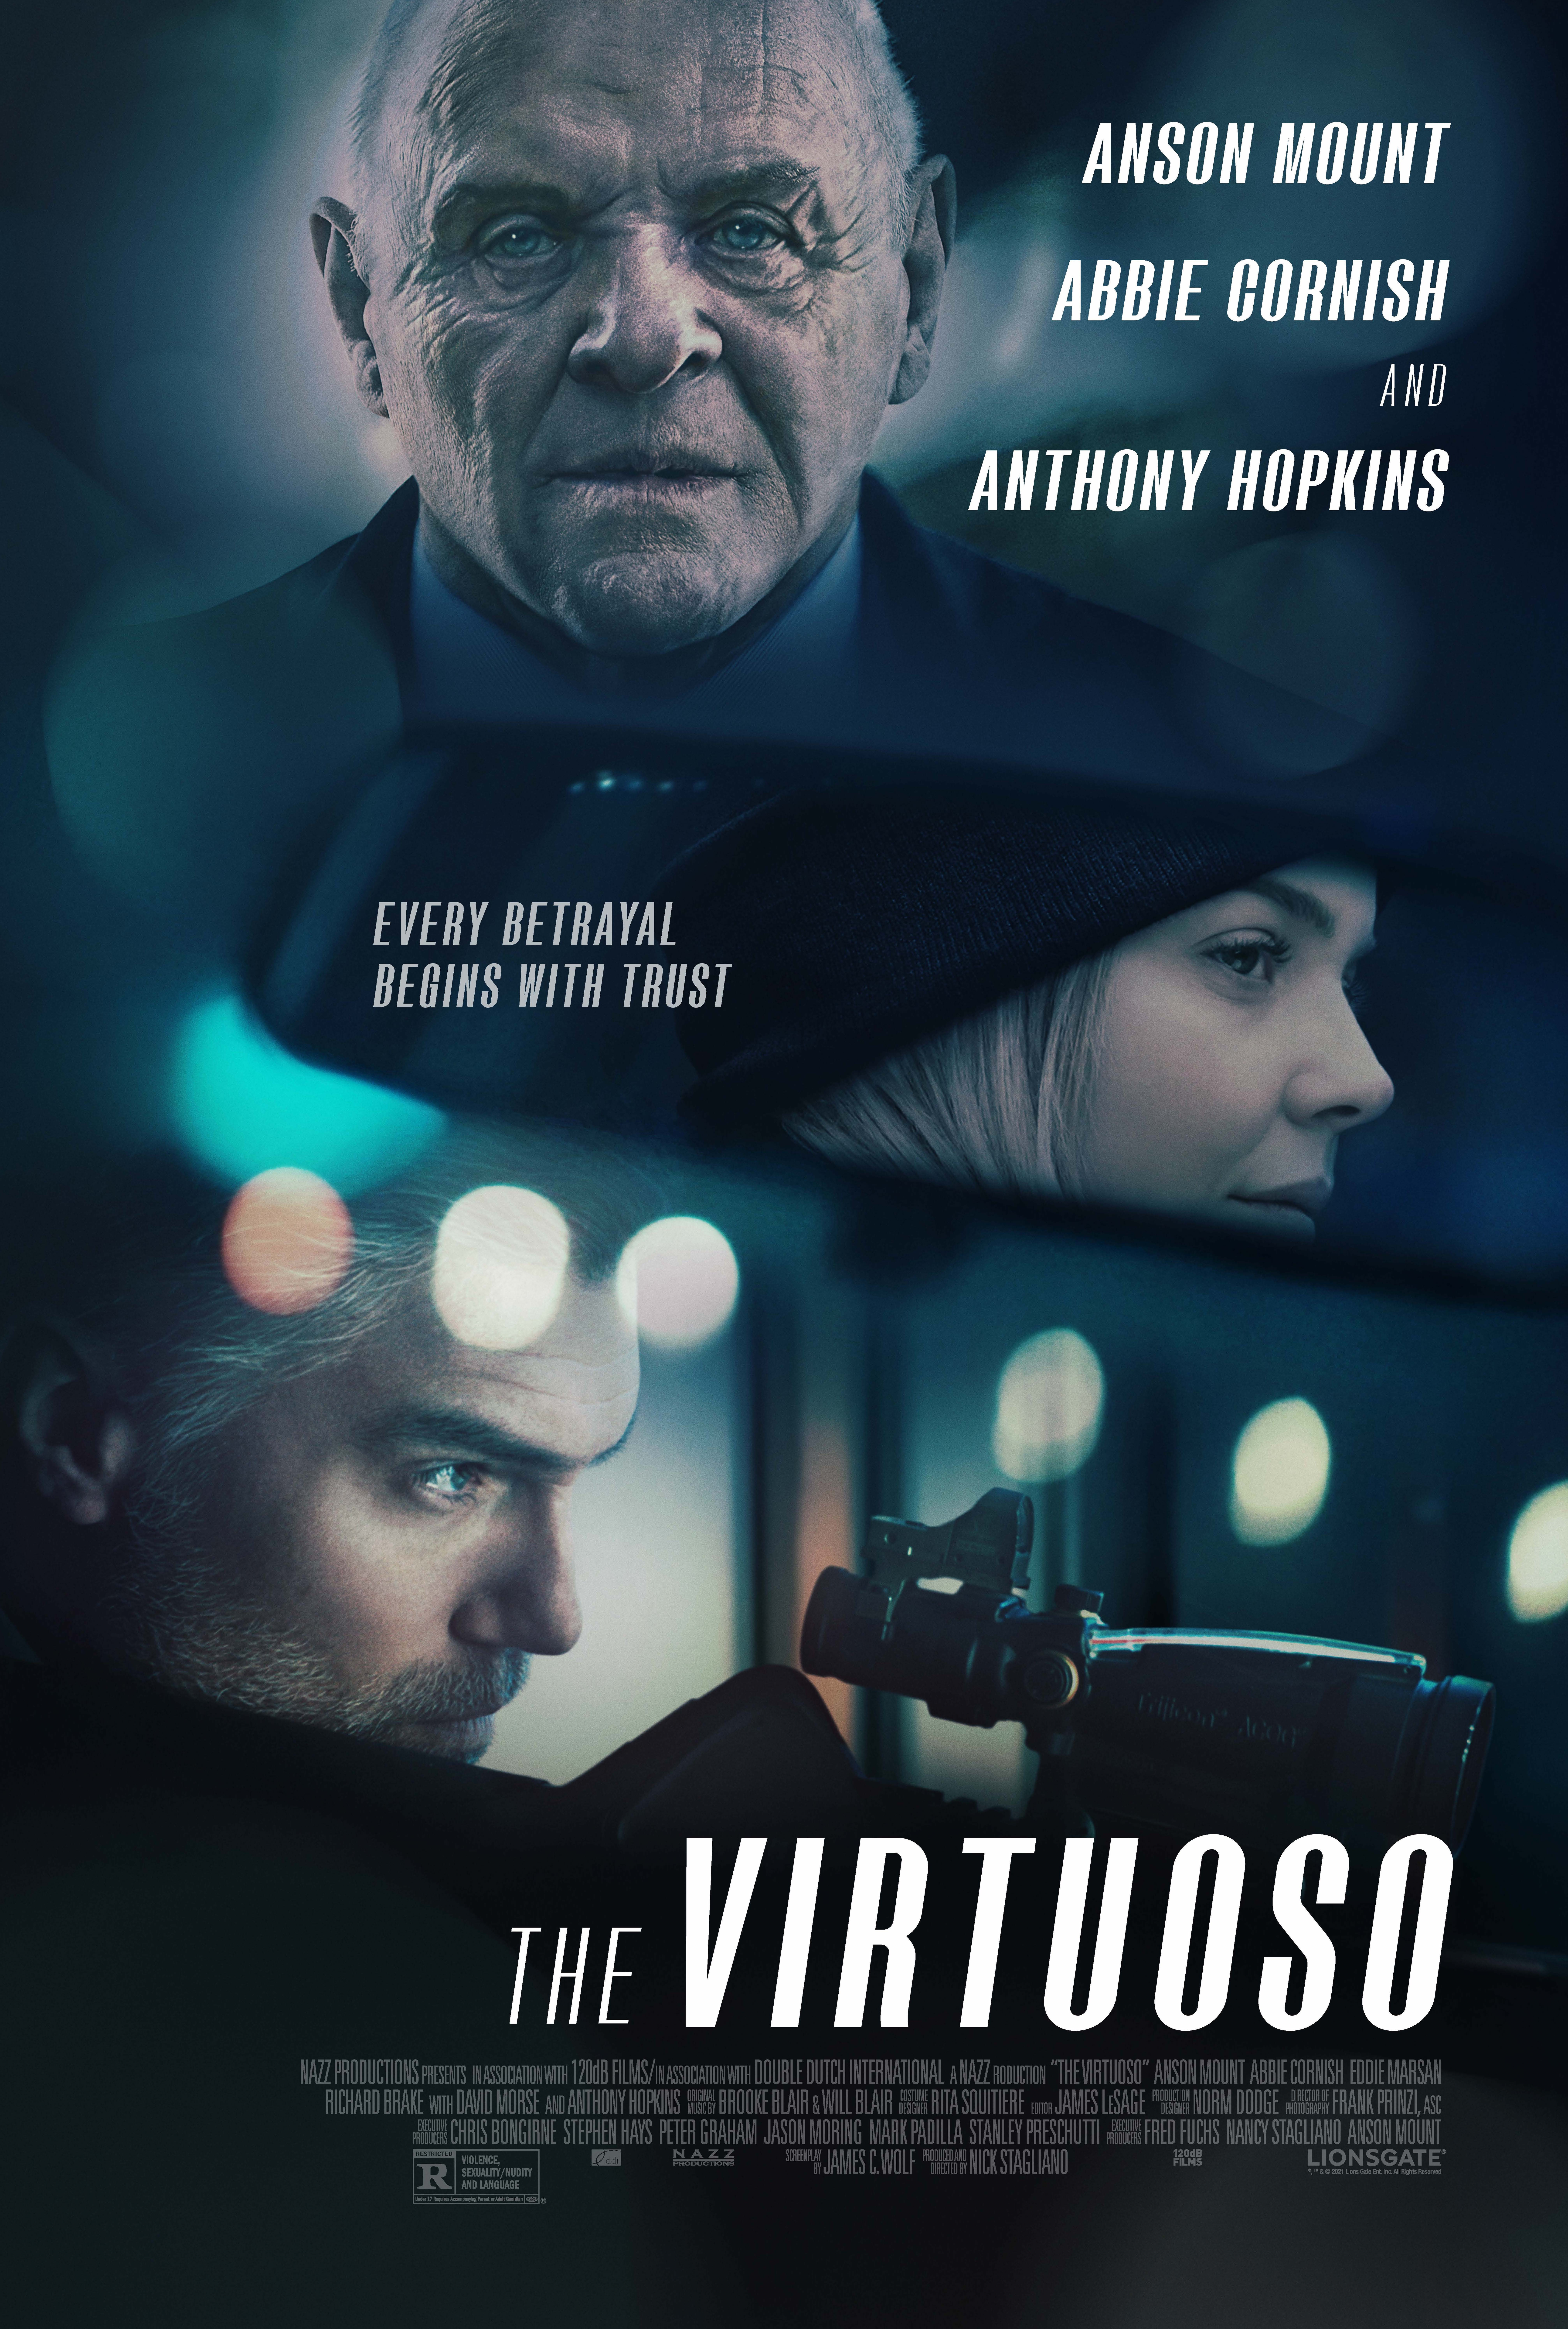 Anthony Hopkins The Virtuoso Trailer